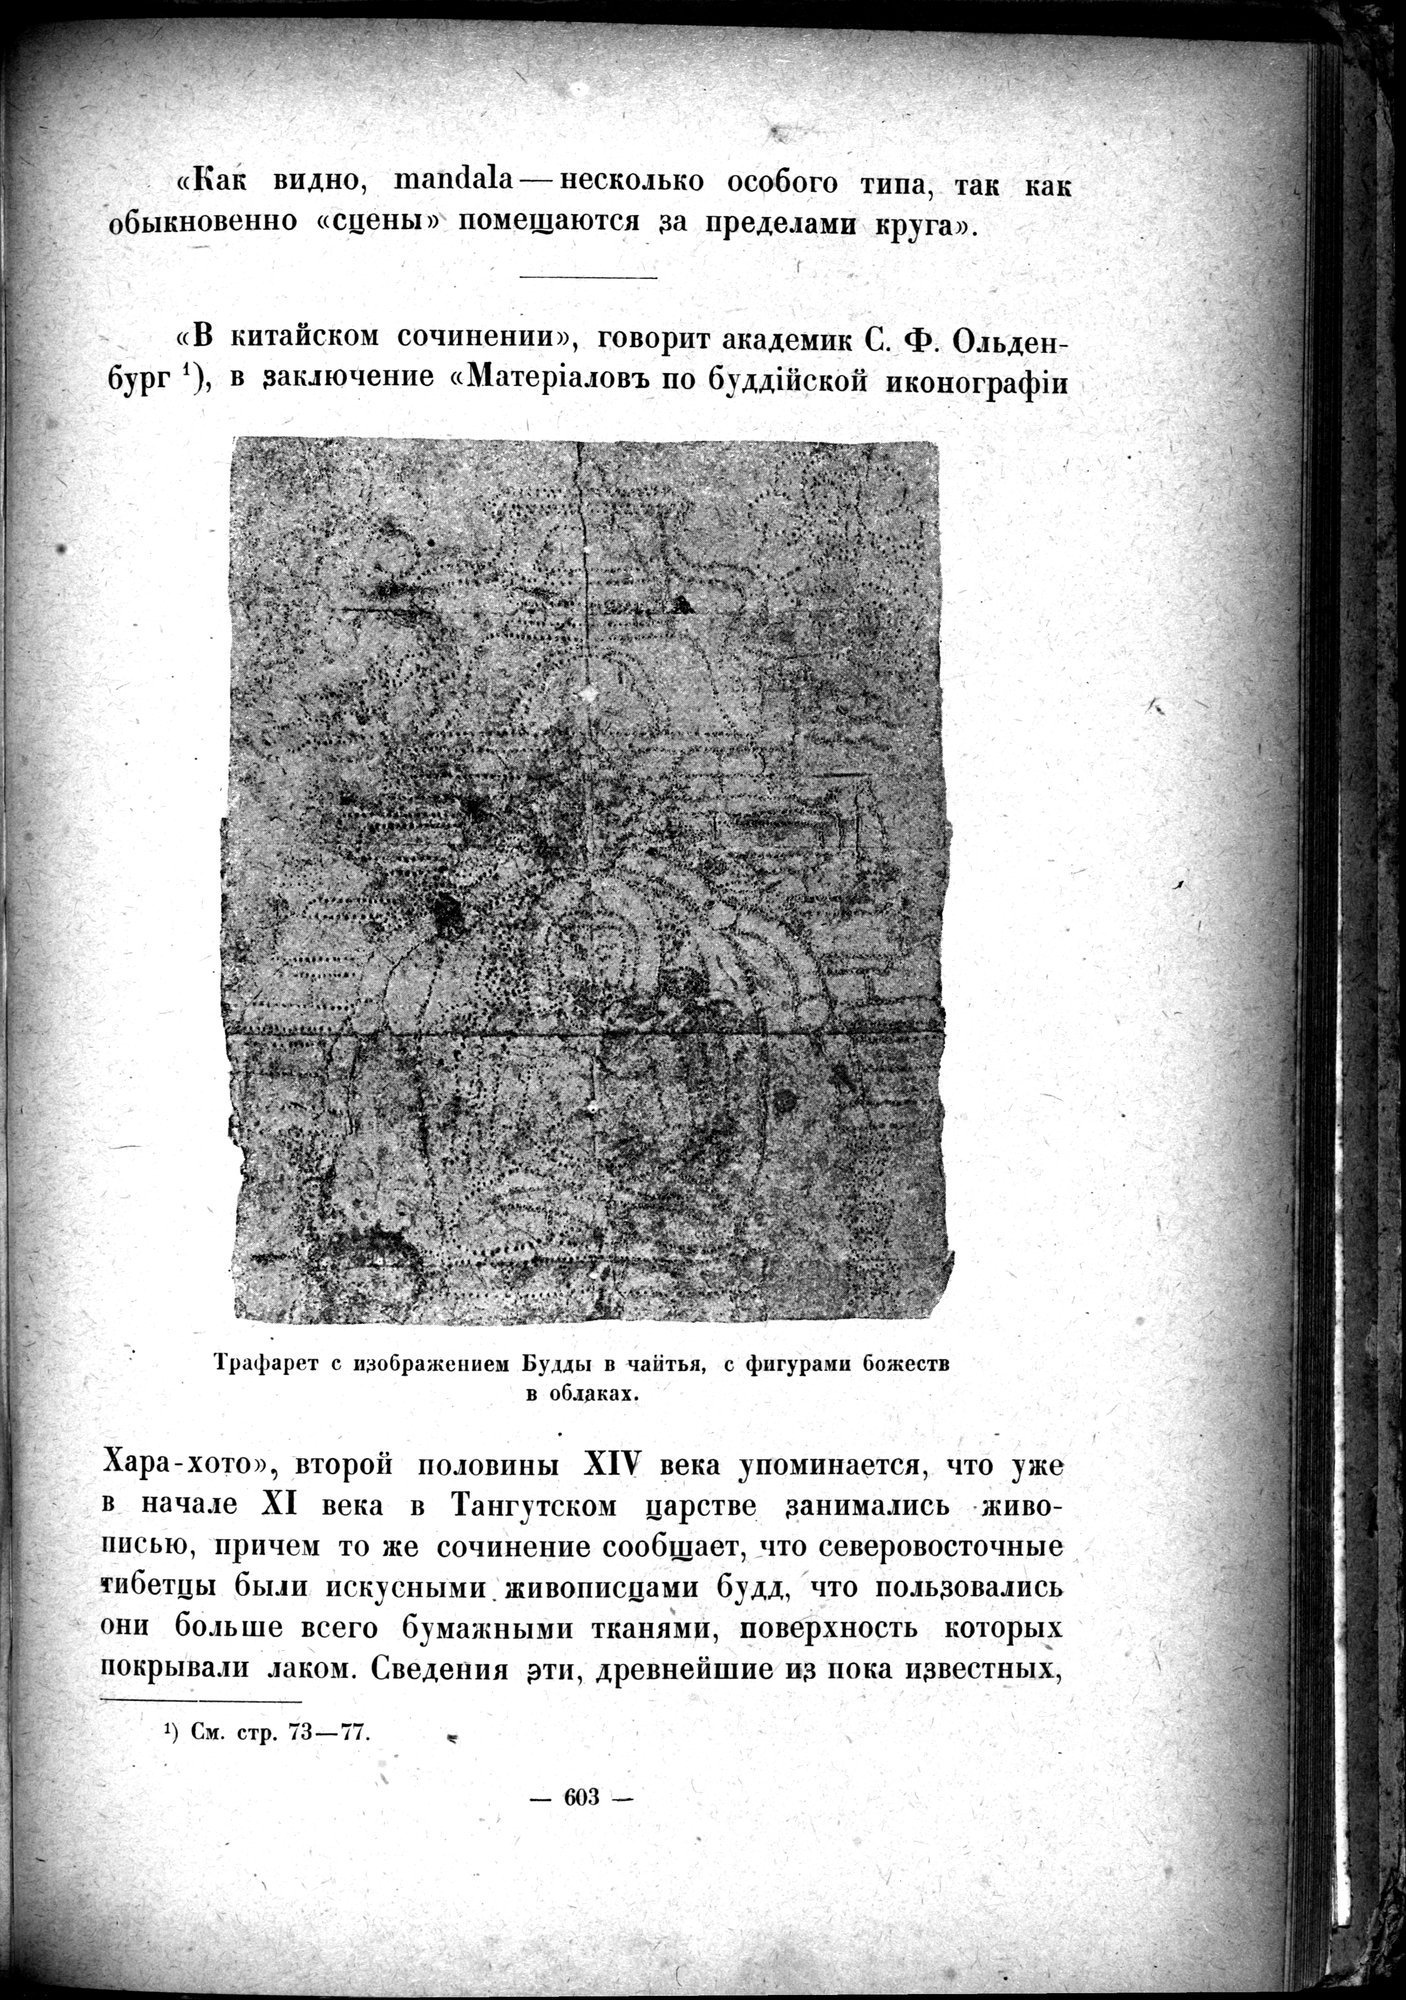 Mongoliya i Amdo i mertby gorod Khara-Khoto : vol.1 / Page 689 (Grayscale High Resolution Image)